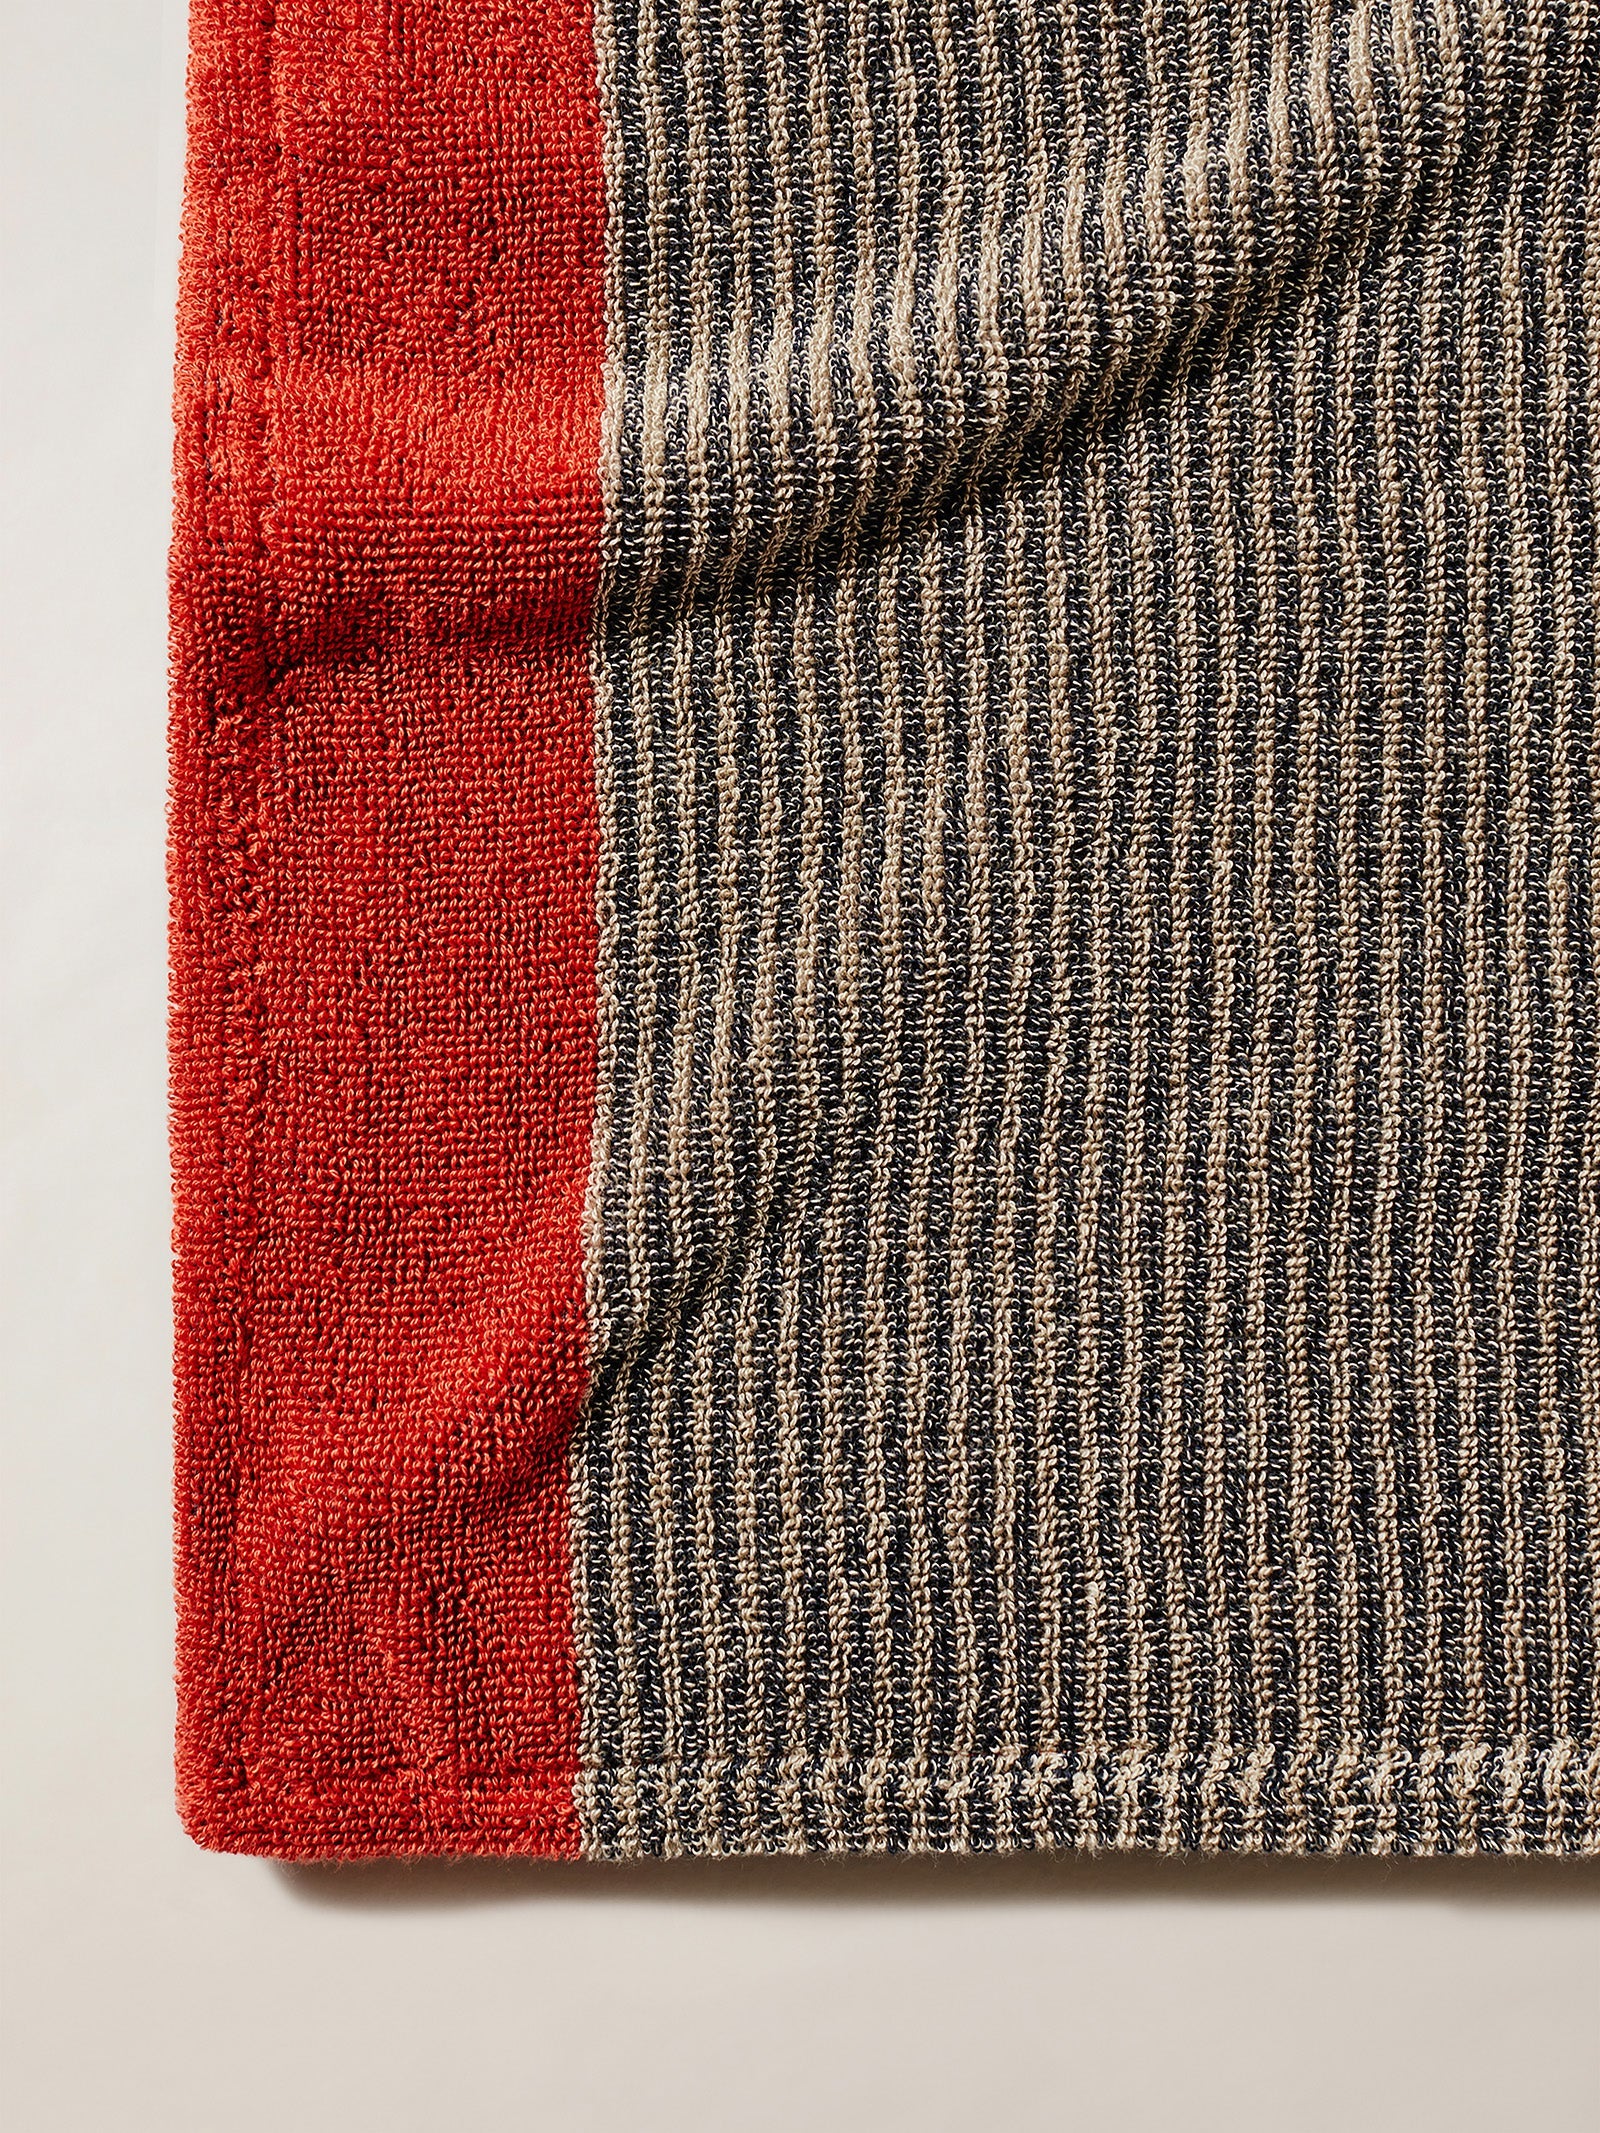 Medium Towel - Smoke and Terra Red